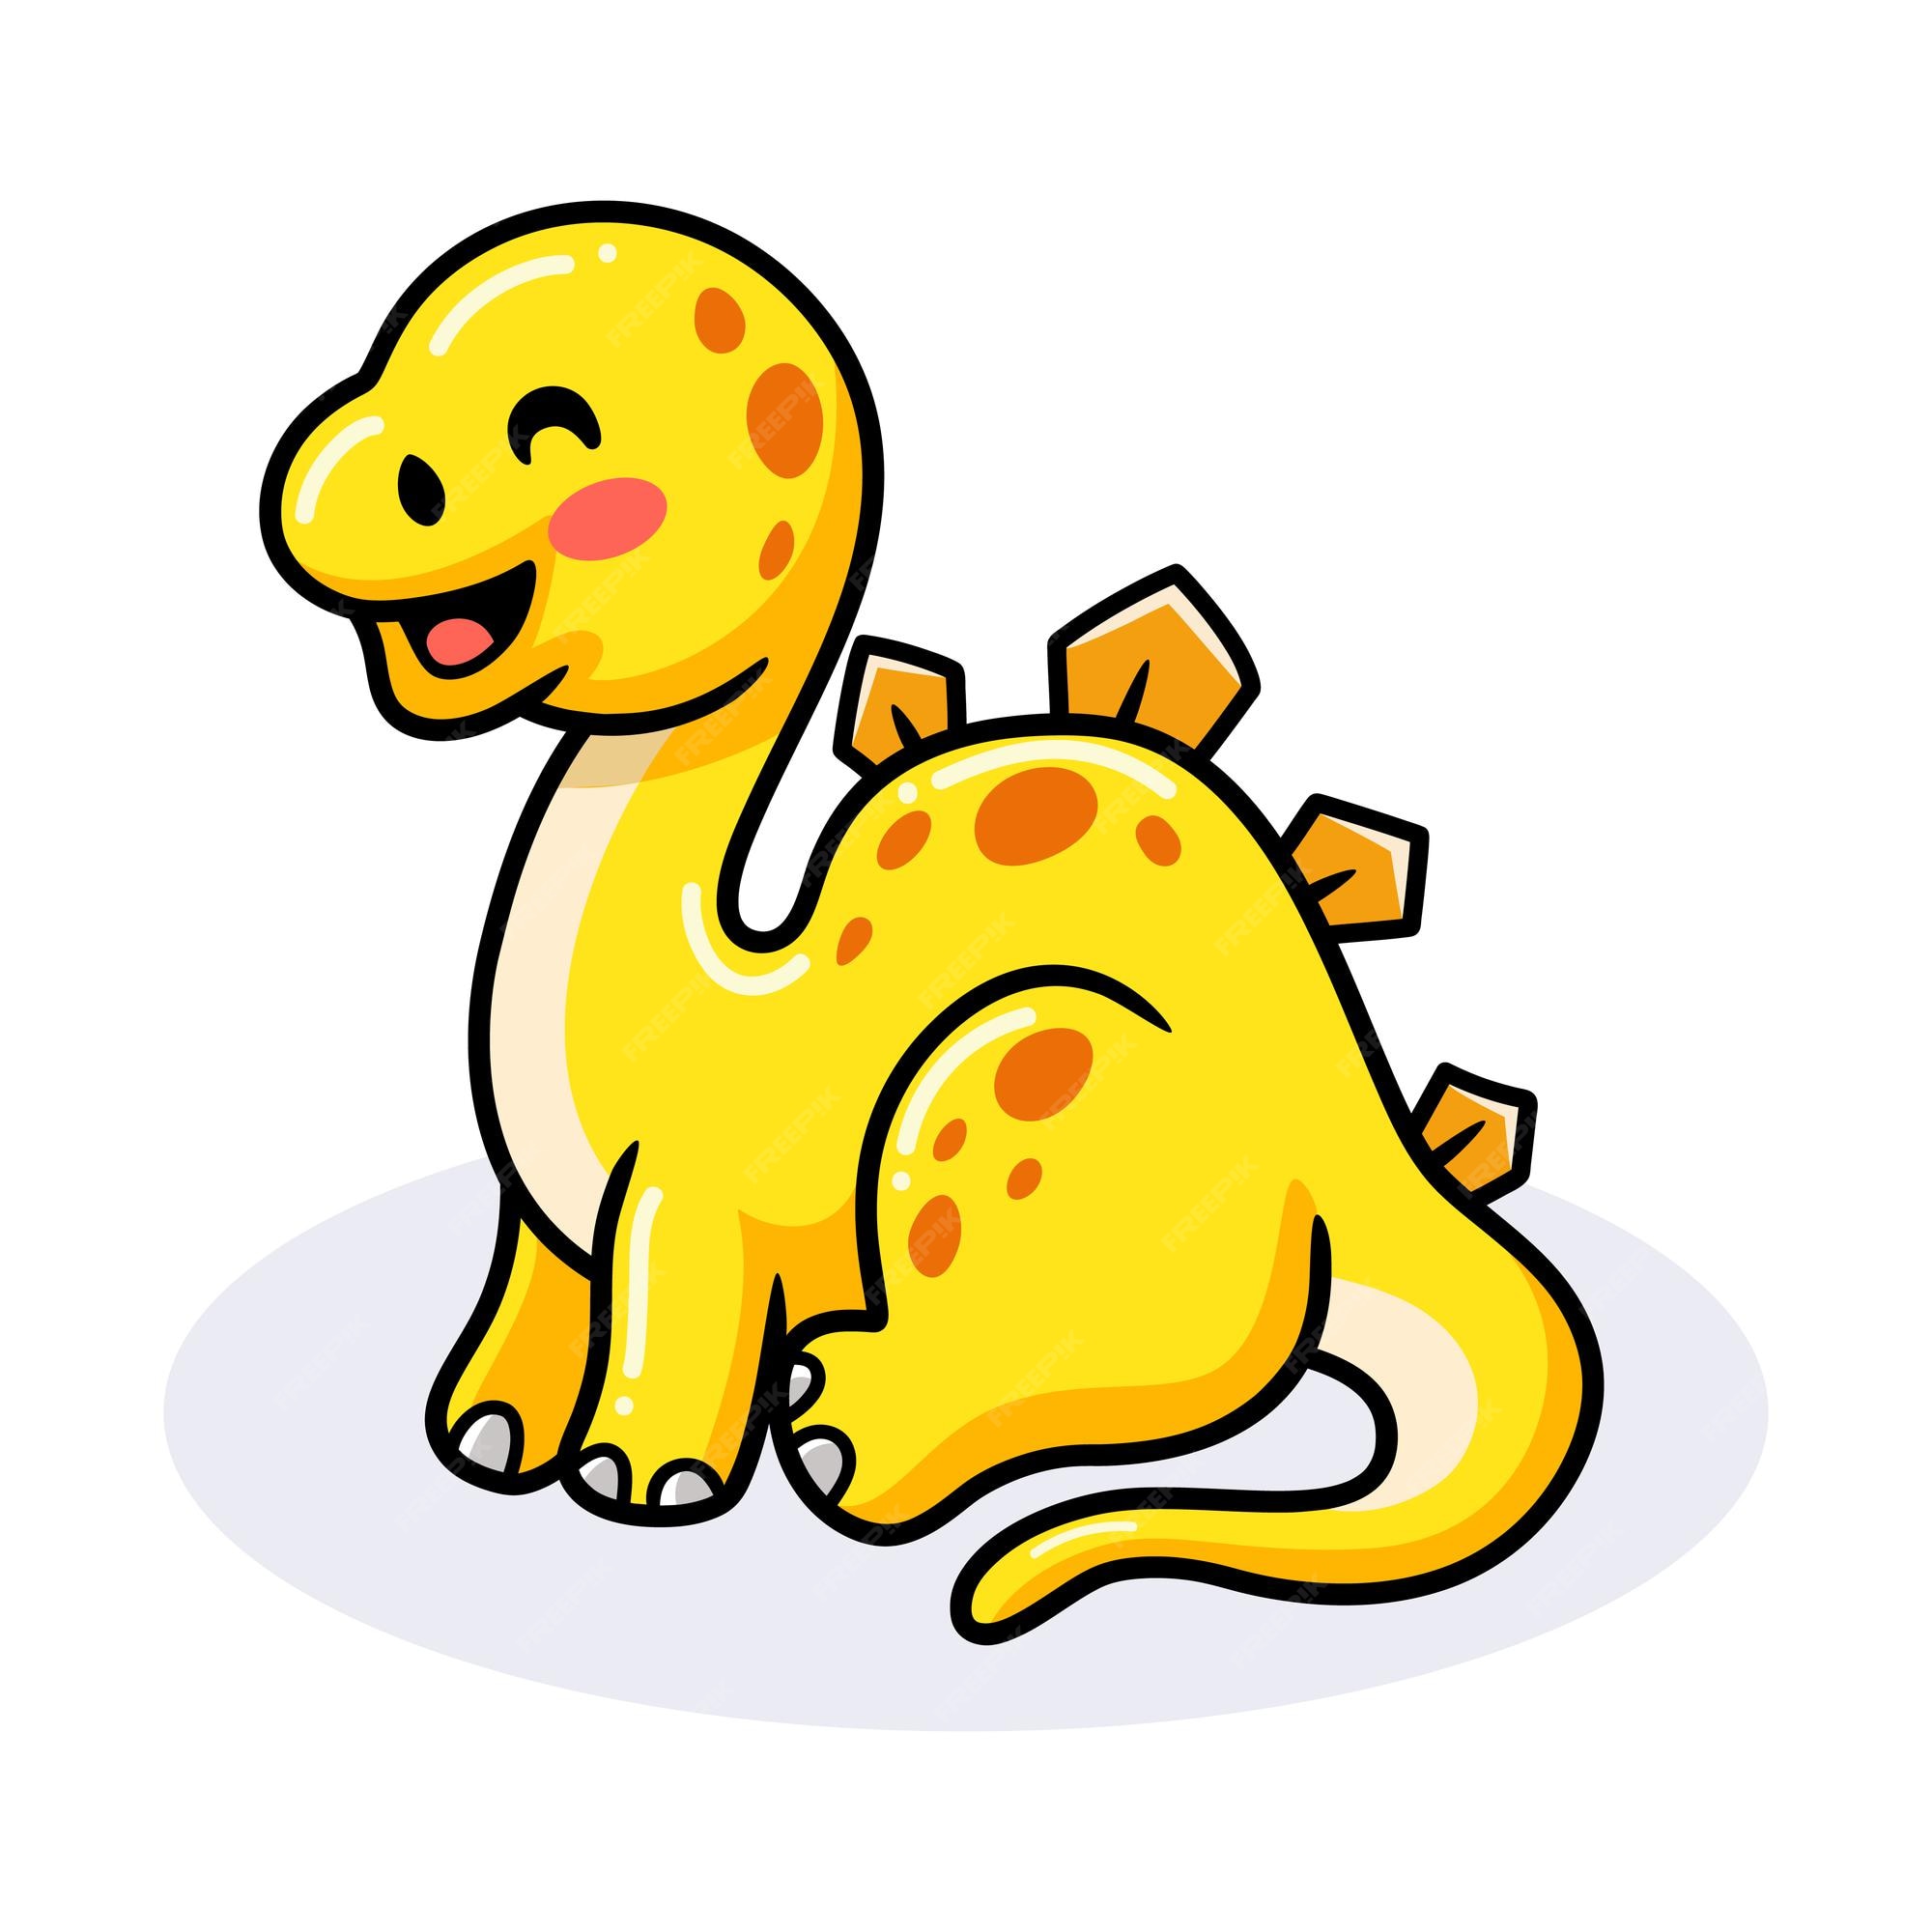 Premium Vector | Cute little stegosaurus dinosaur cartoon